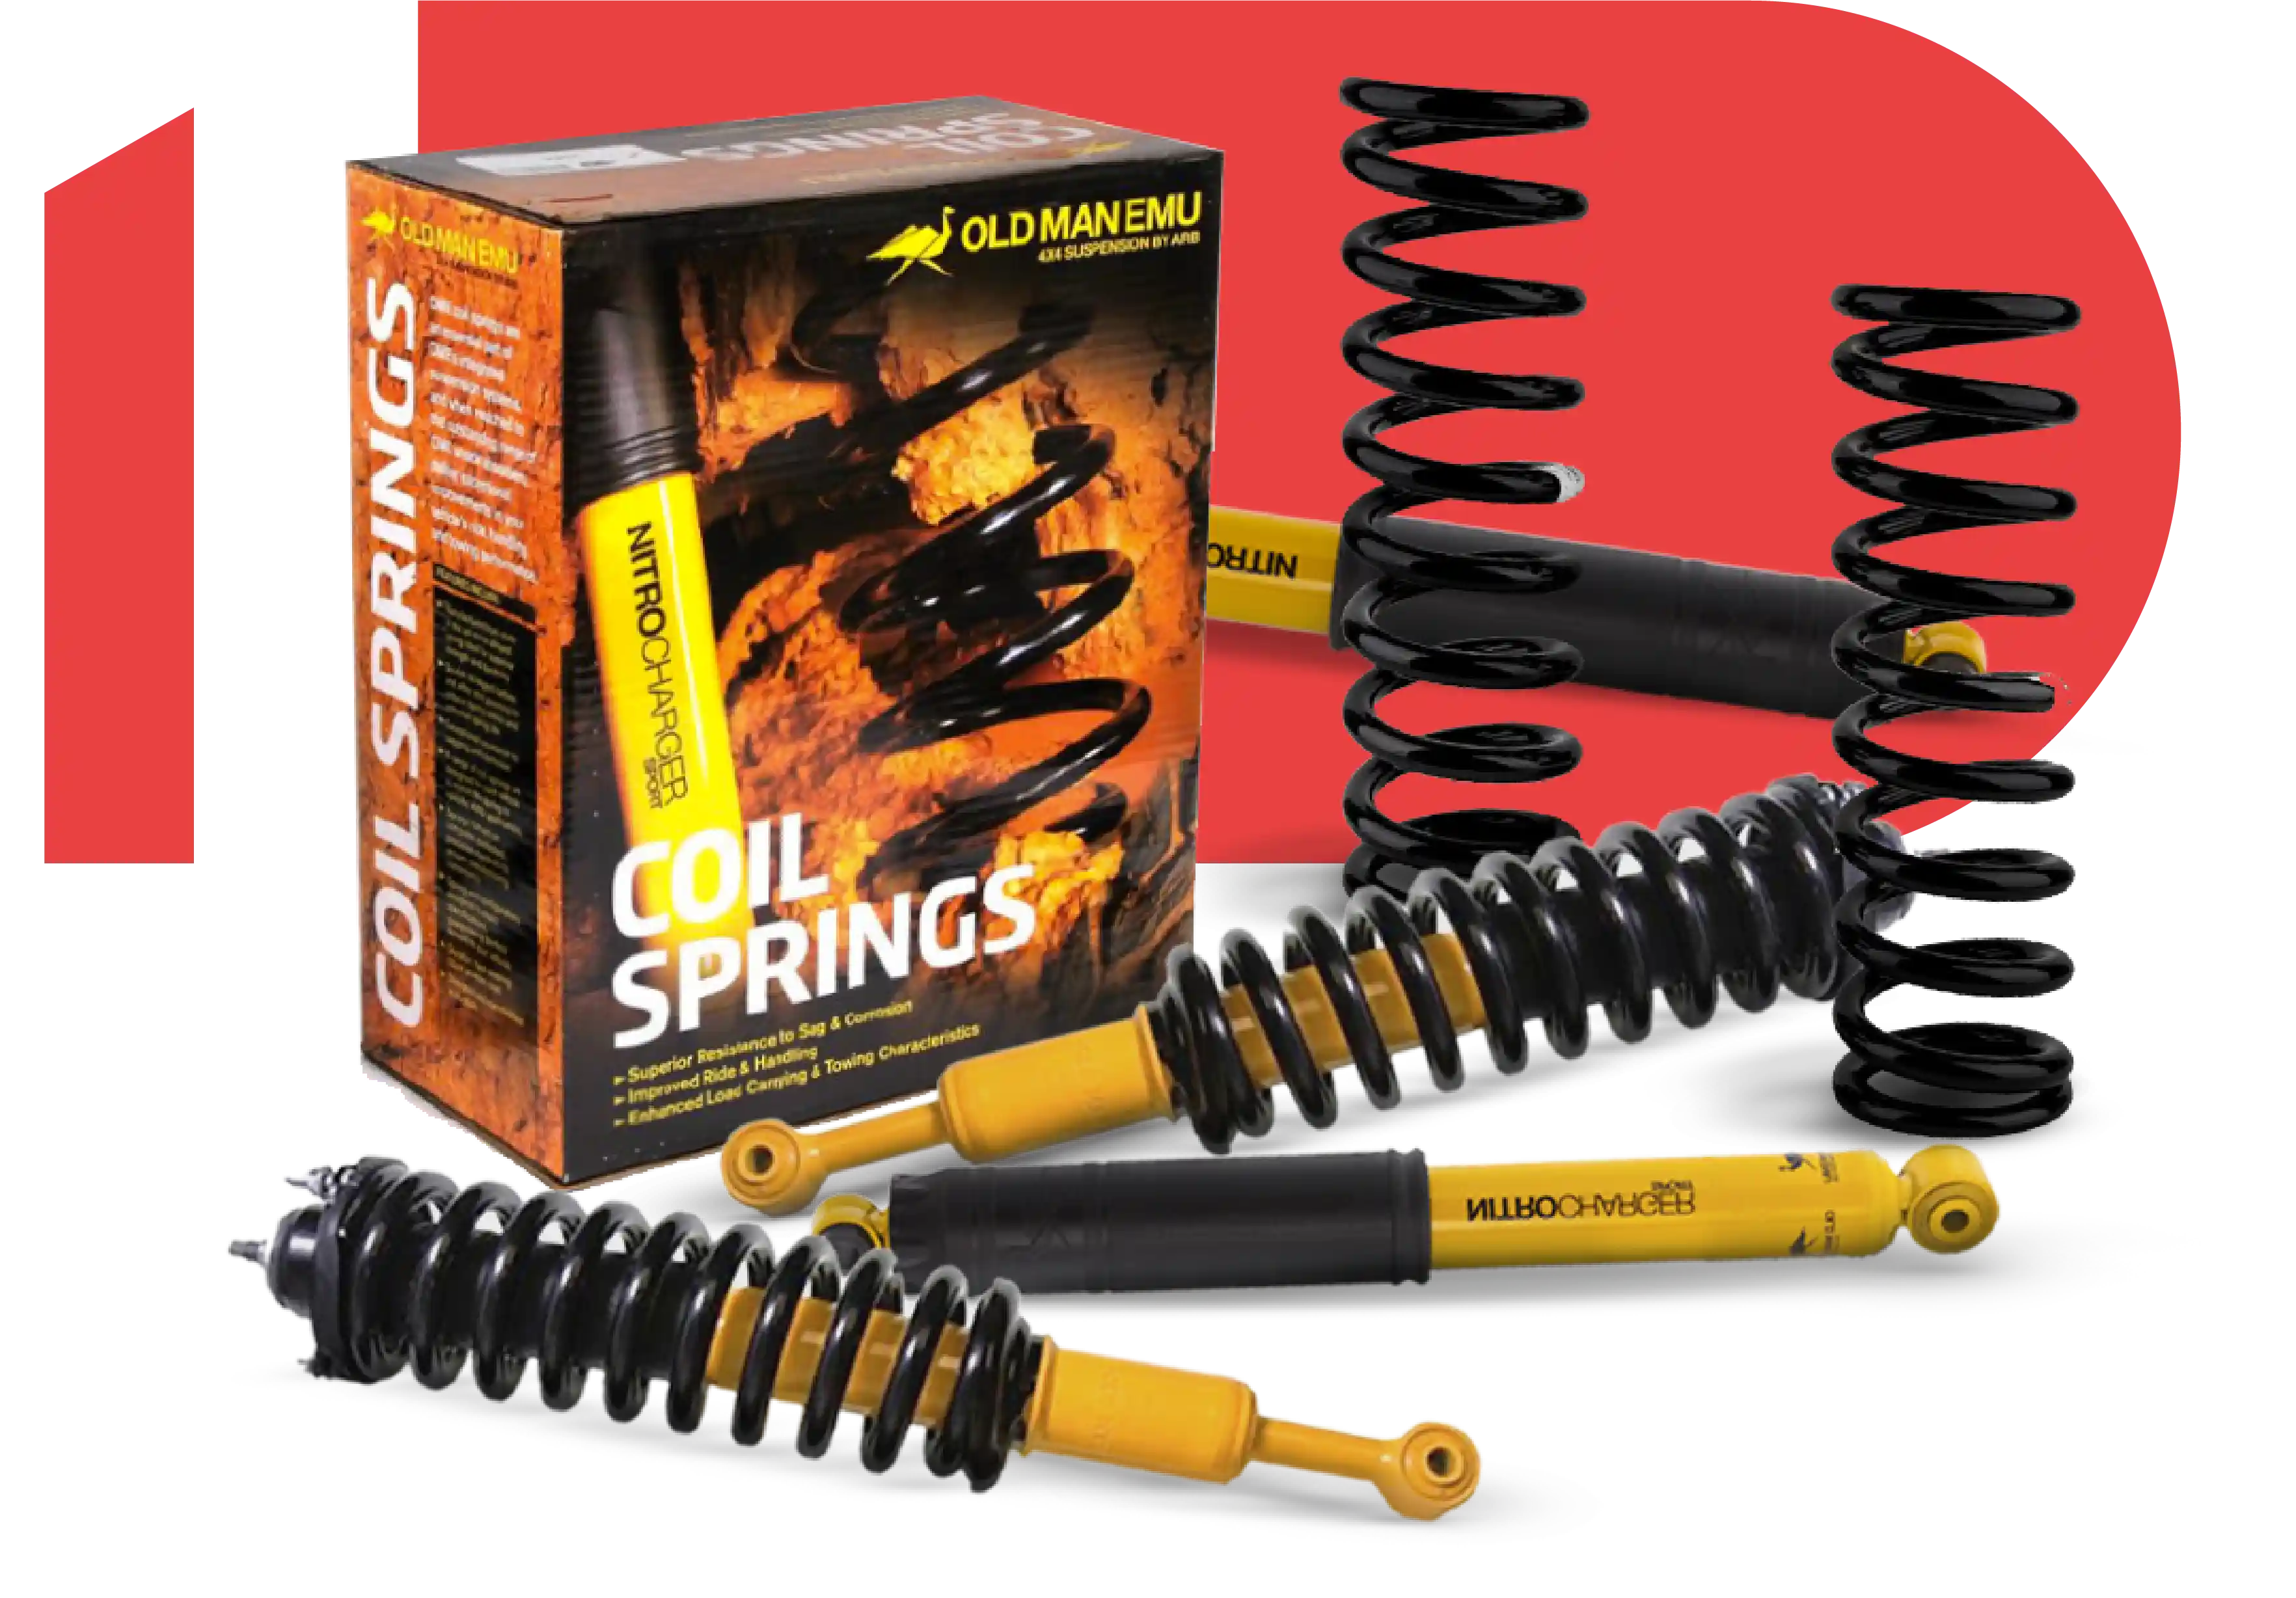 Coil springs